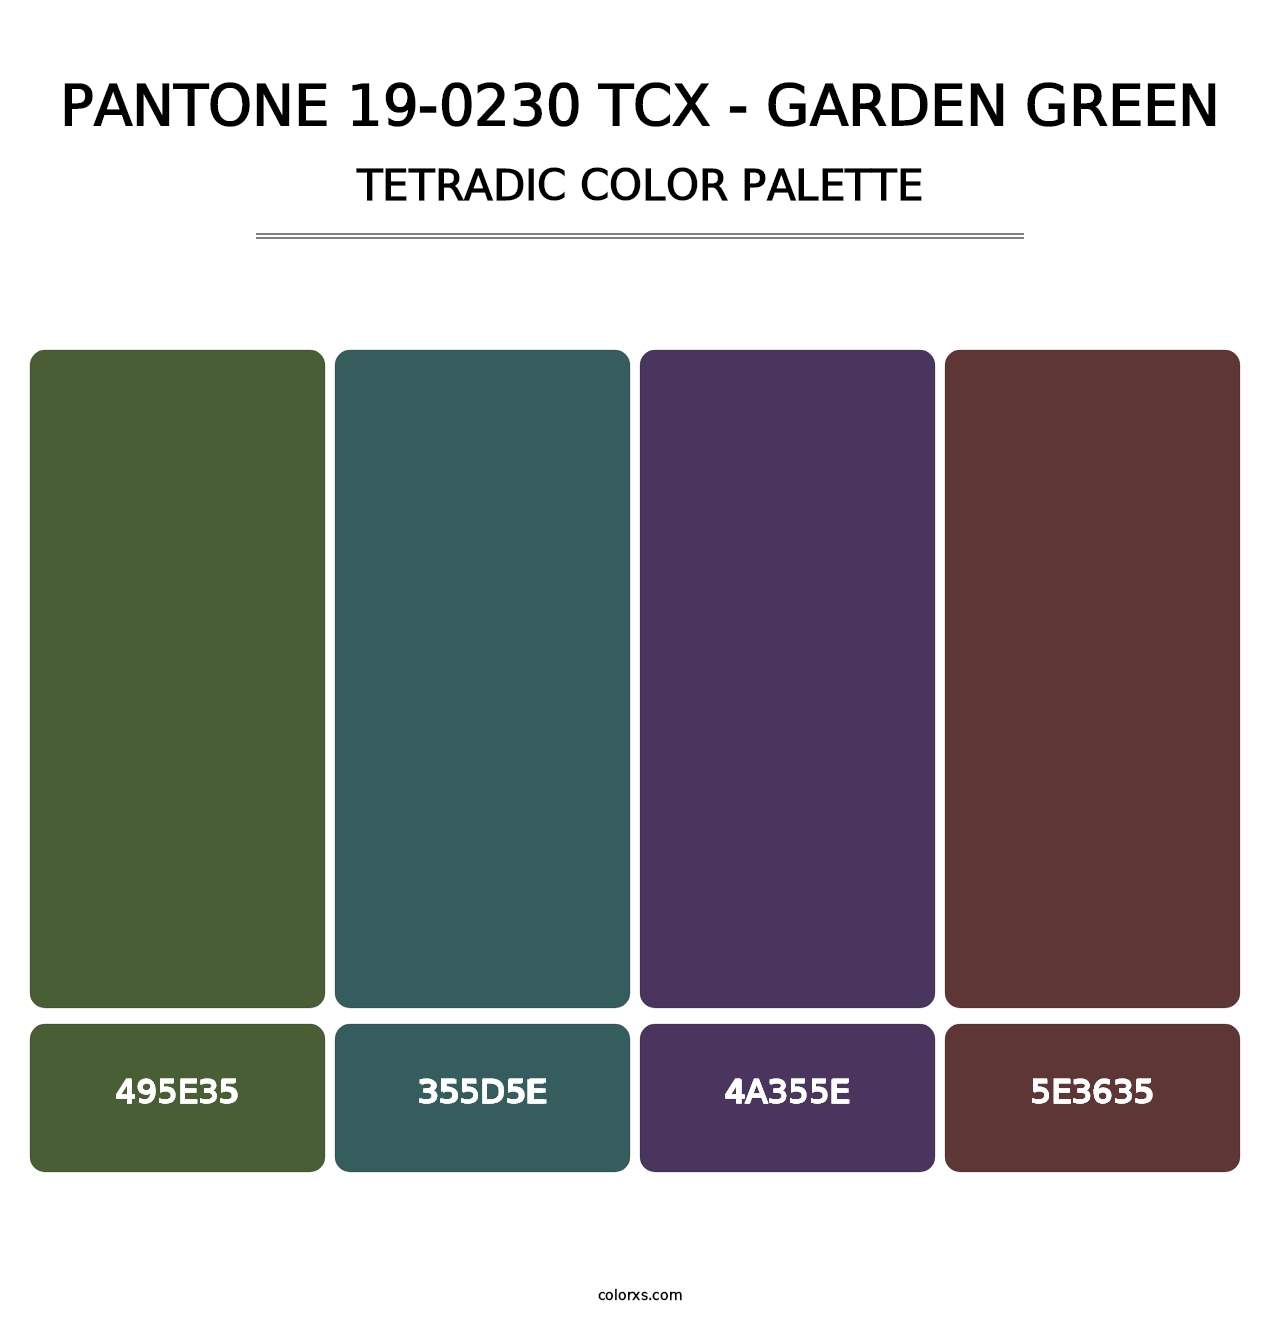 PANTONE 19-0230 TCX - Garden Green - Tetradic Color Palette